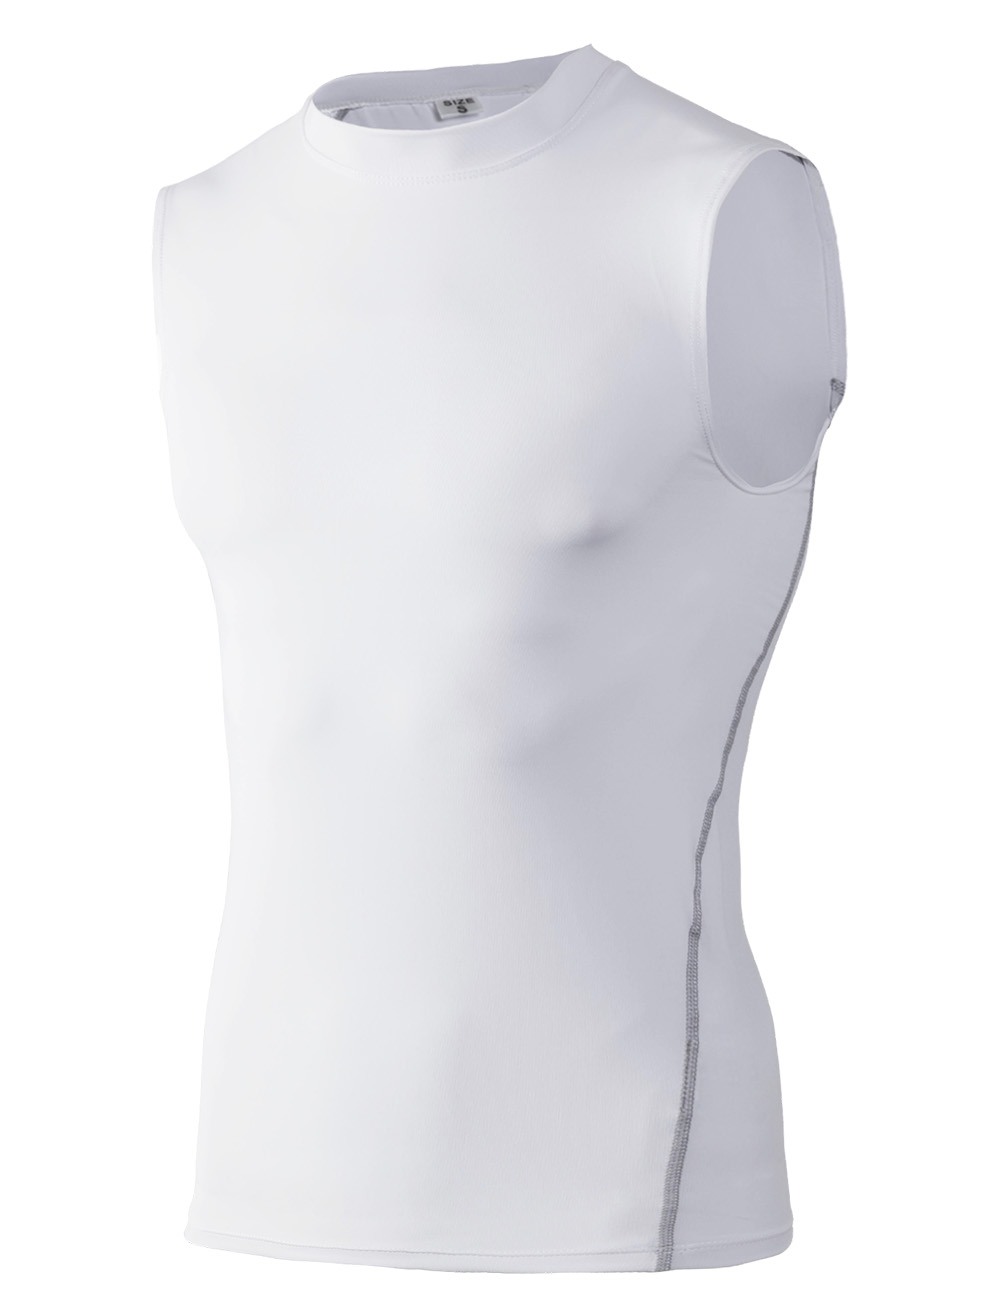 Toptie Men's Slimming Body Shaper Compression Shirt, Shapewear Sculpting  Vest Muscle Tank-Gray-S